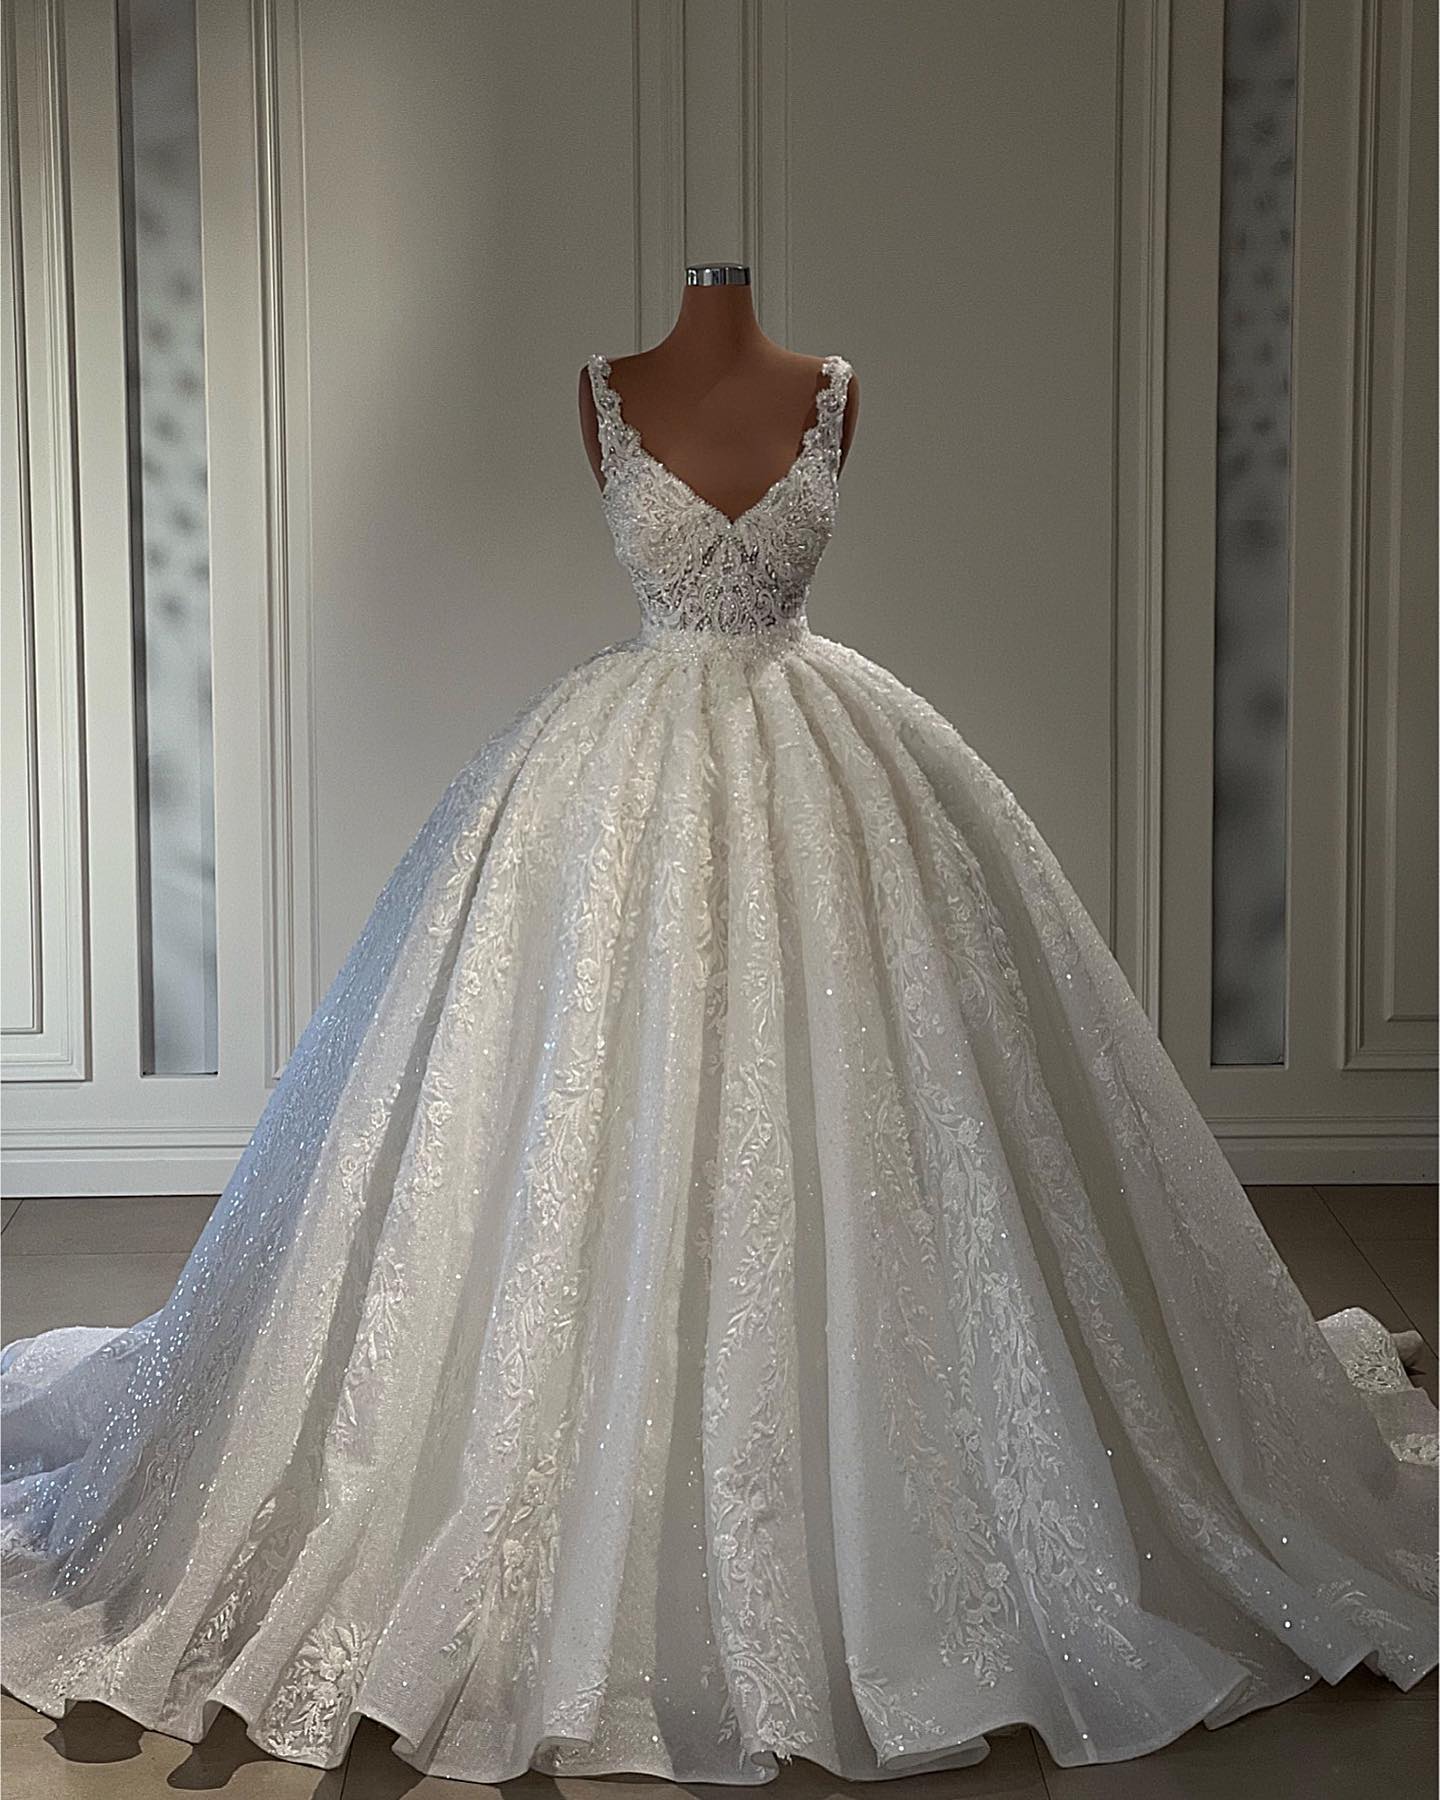 Gorgeous Long Ball Gown Sweetheart Sleeveless Lace Wedding Dress with Ruffles-BIZTUNNEL